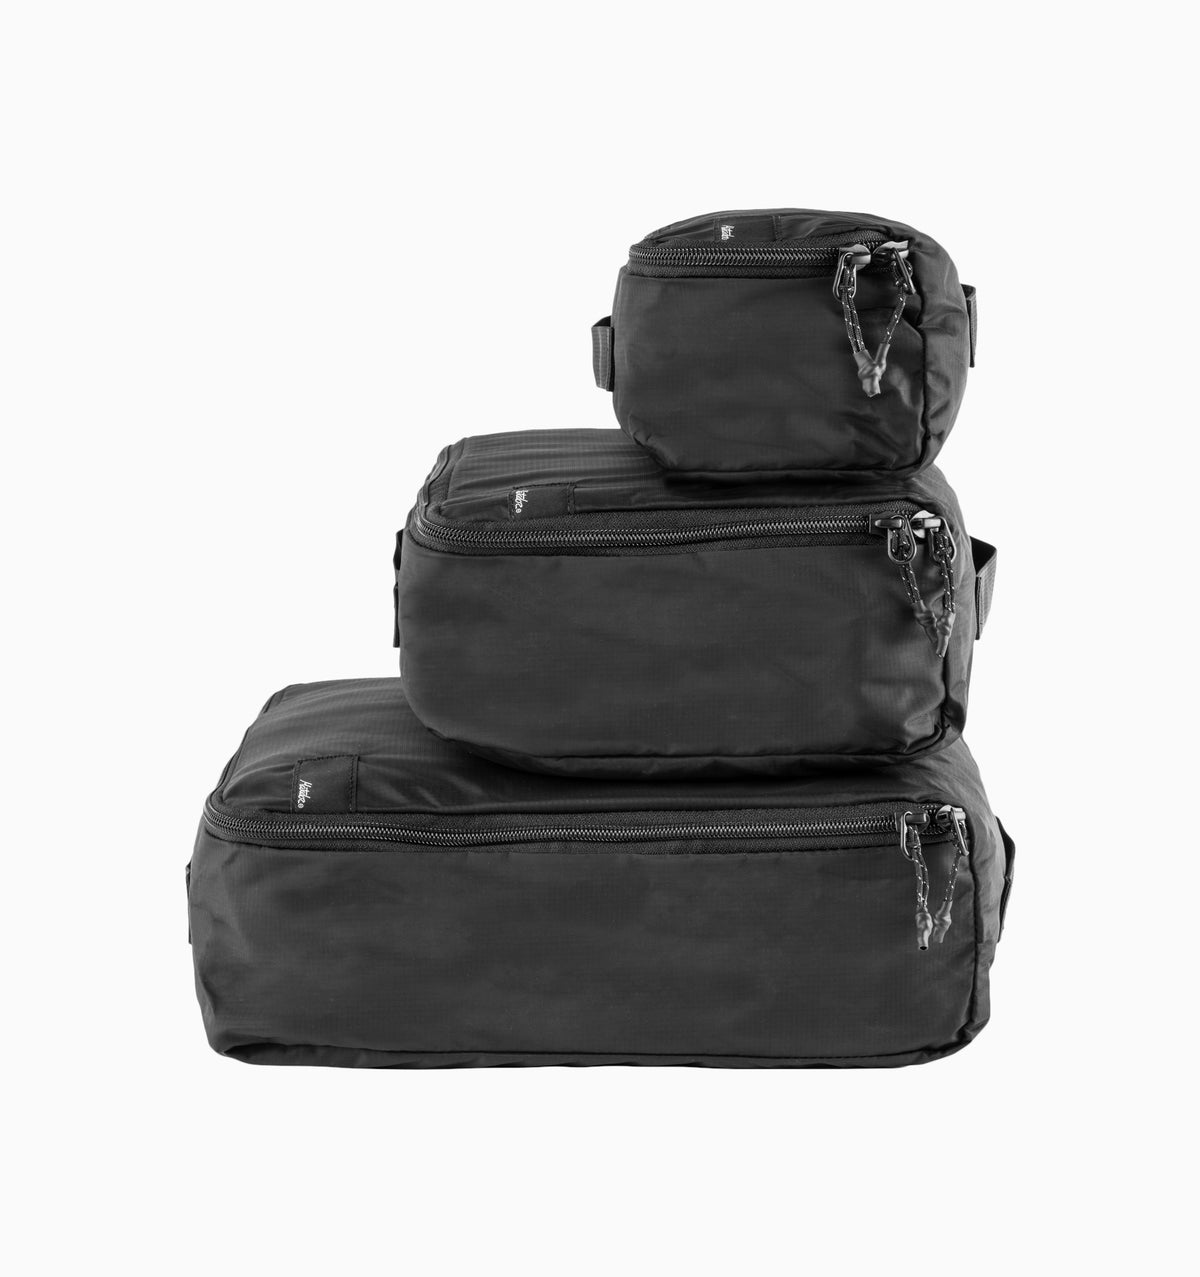 Matador Packing Cube (3 Pack) - Black